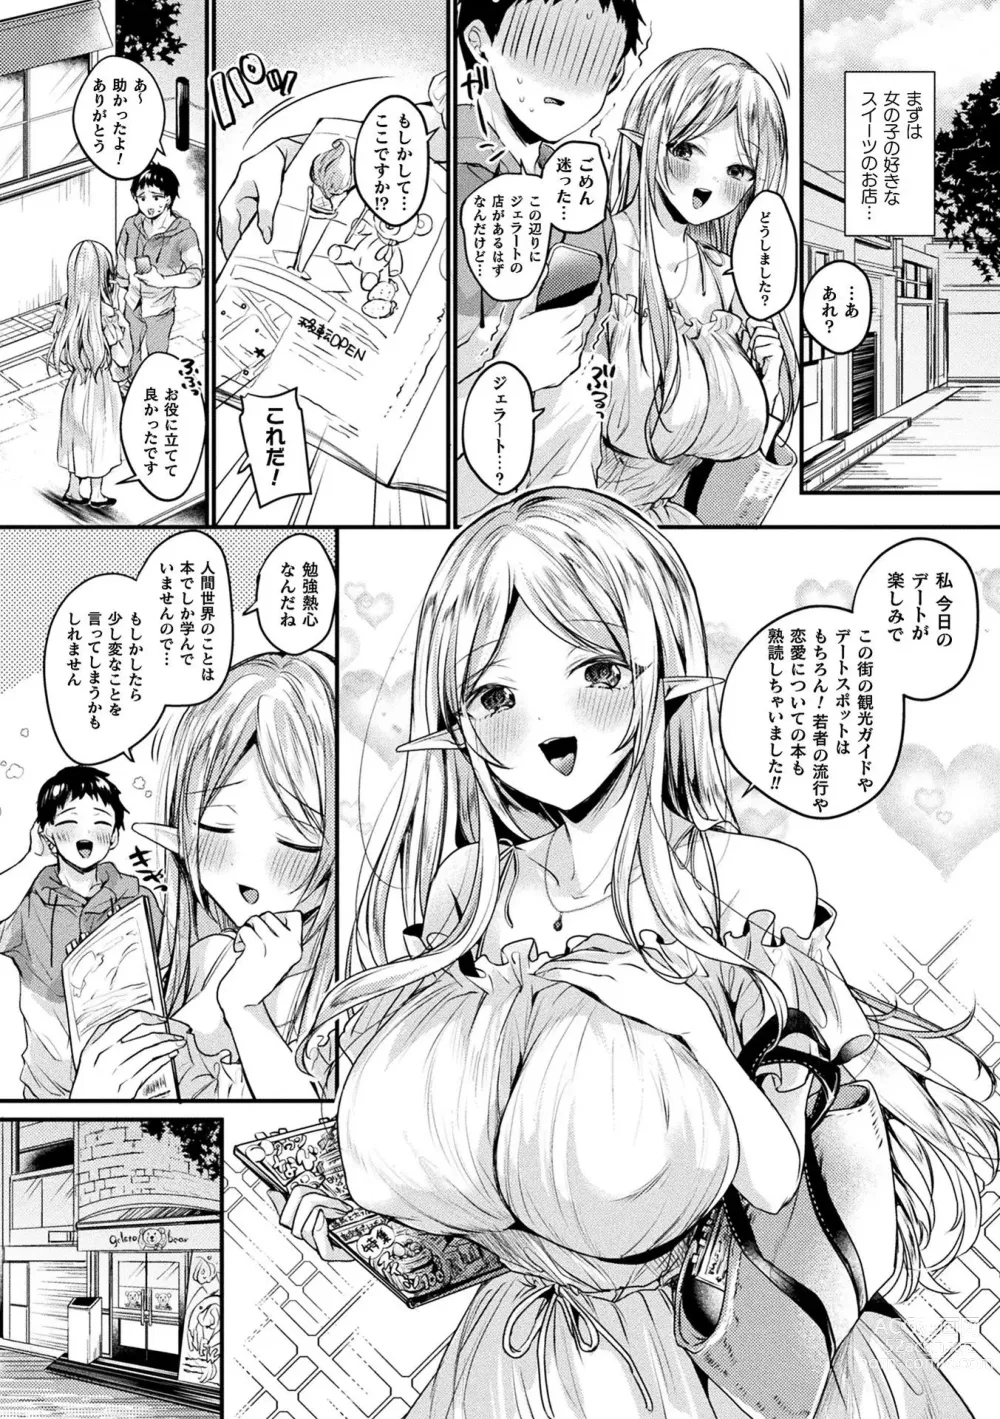 Page 6 of manga Toromitsu Ecstasy